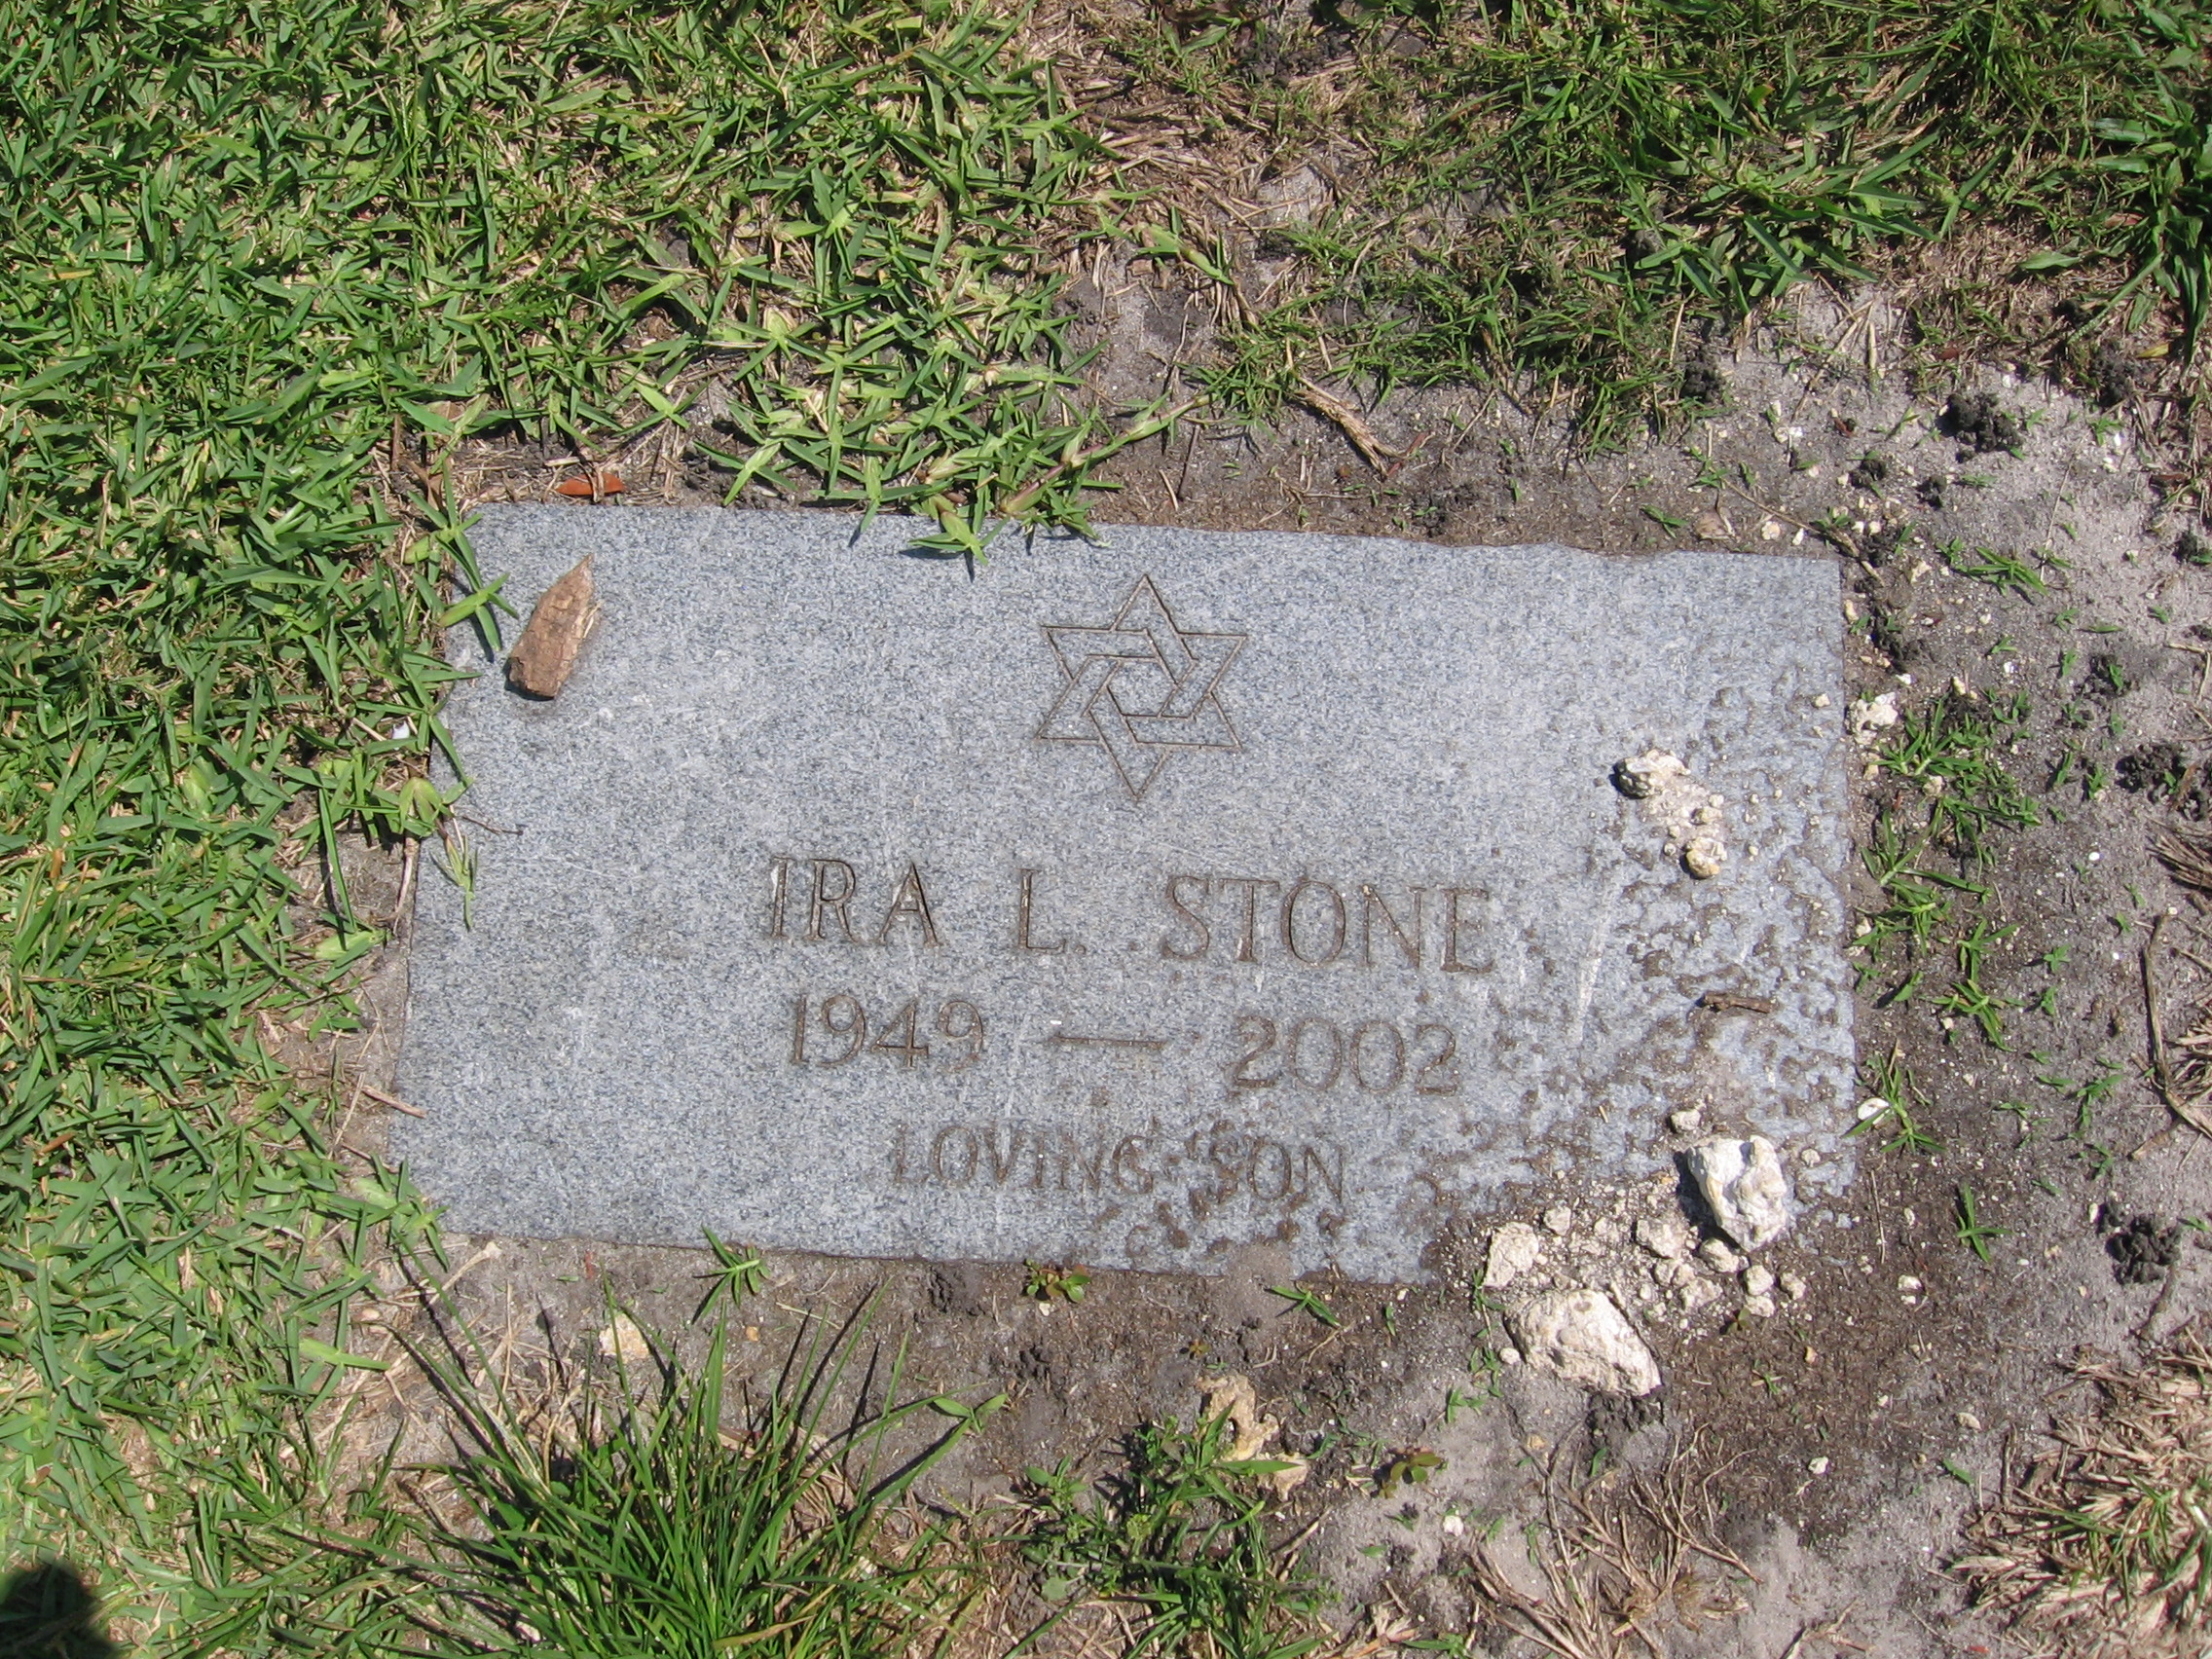 Ira L Stone